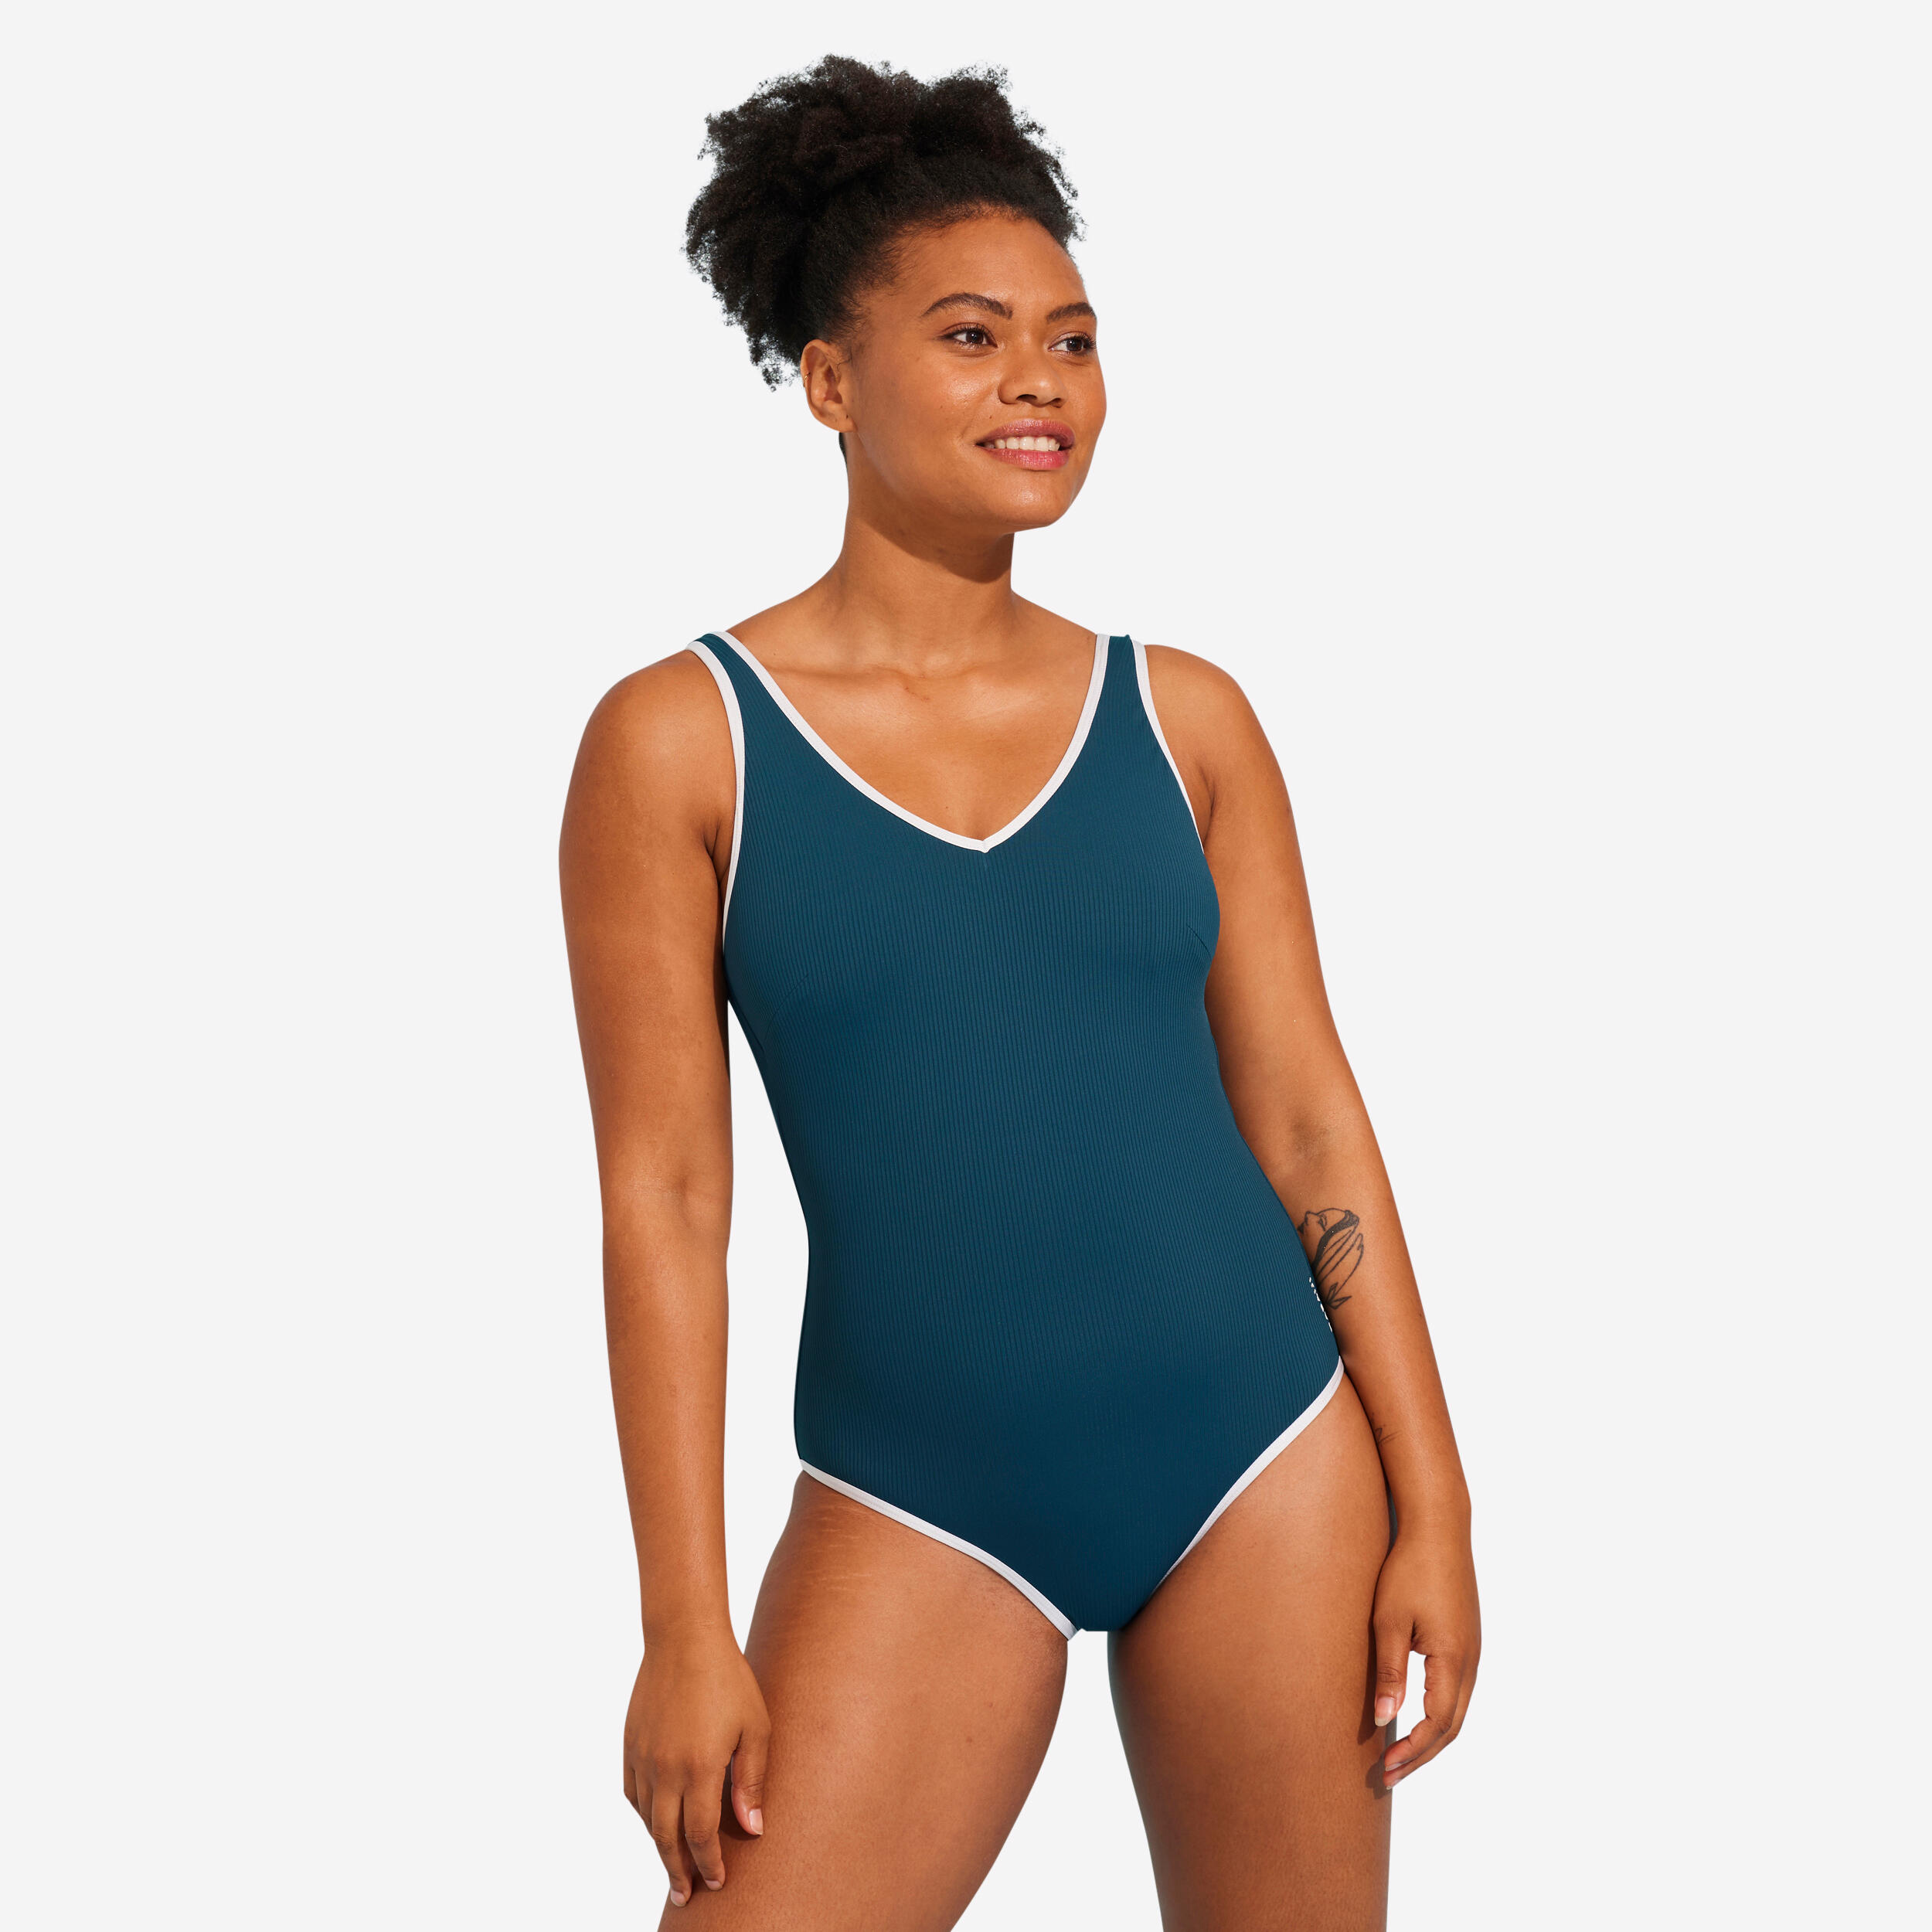 Women's Aquafitness 1-Piece Swimsuit - Karly Black - Black - Nabaiji -  Decathlon